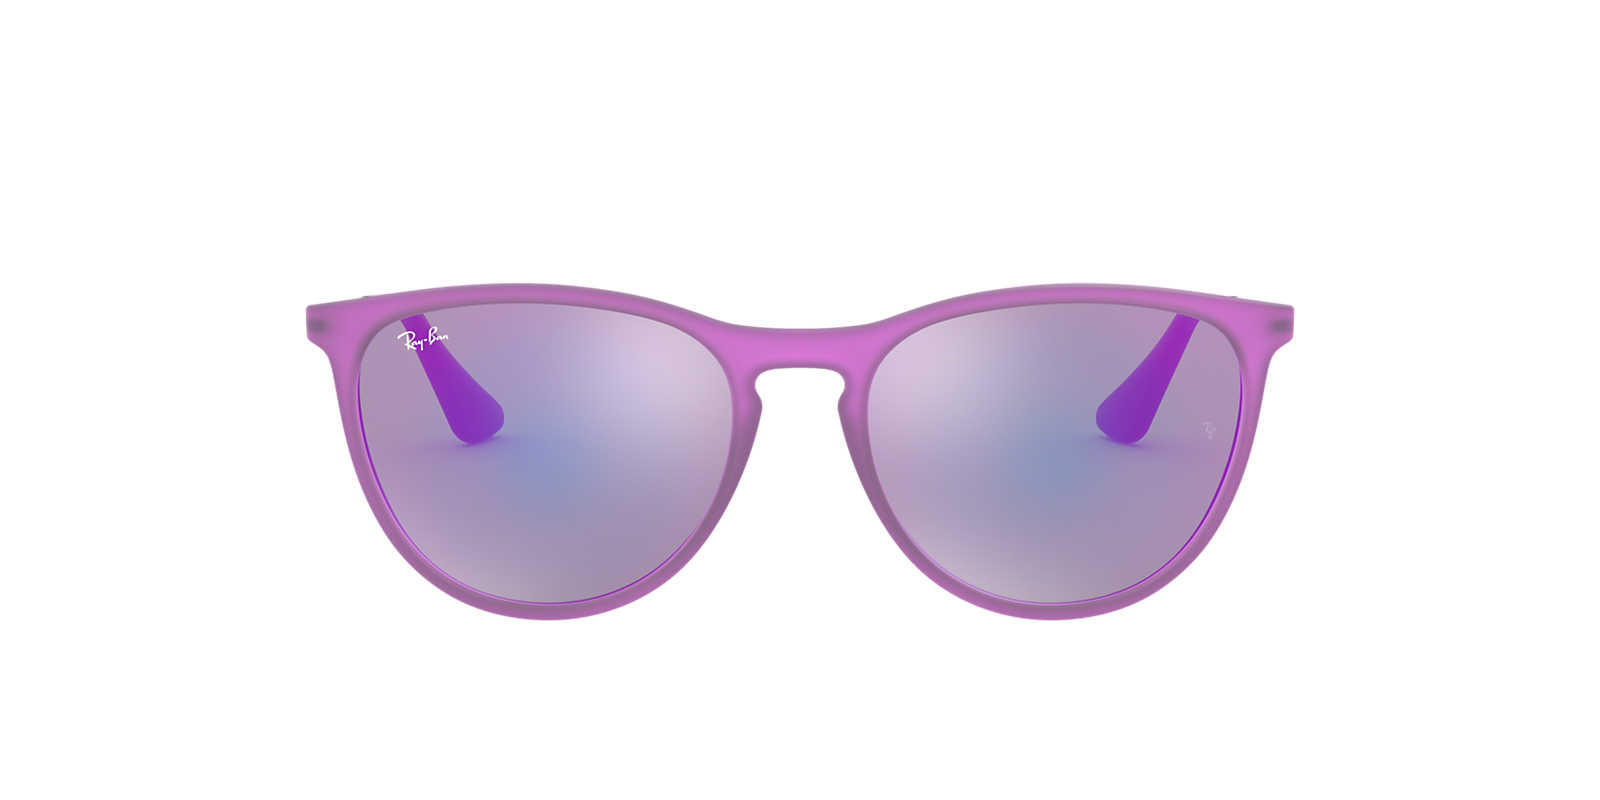 2019 cheap ray ban erika sunglasses online sale